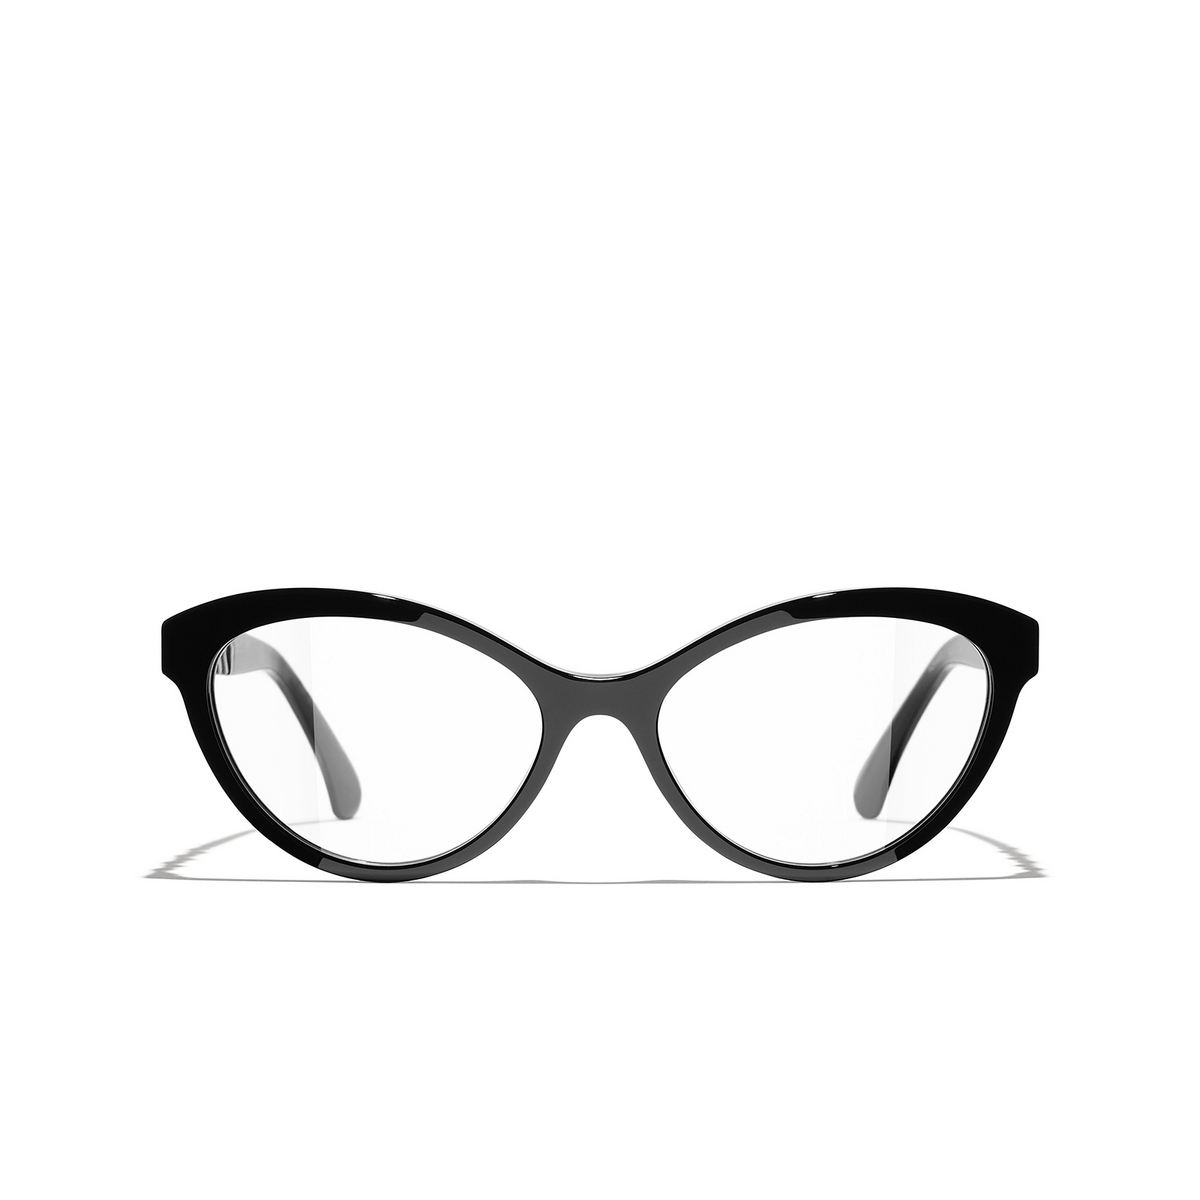 CHANEL cateye Eyeglasses C888 Black - front view